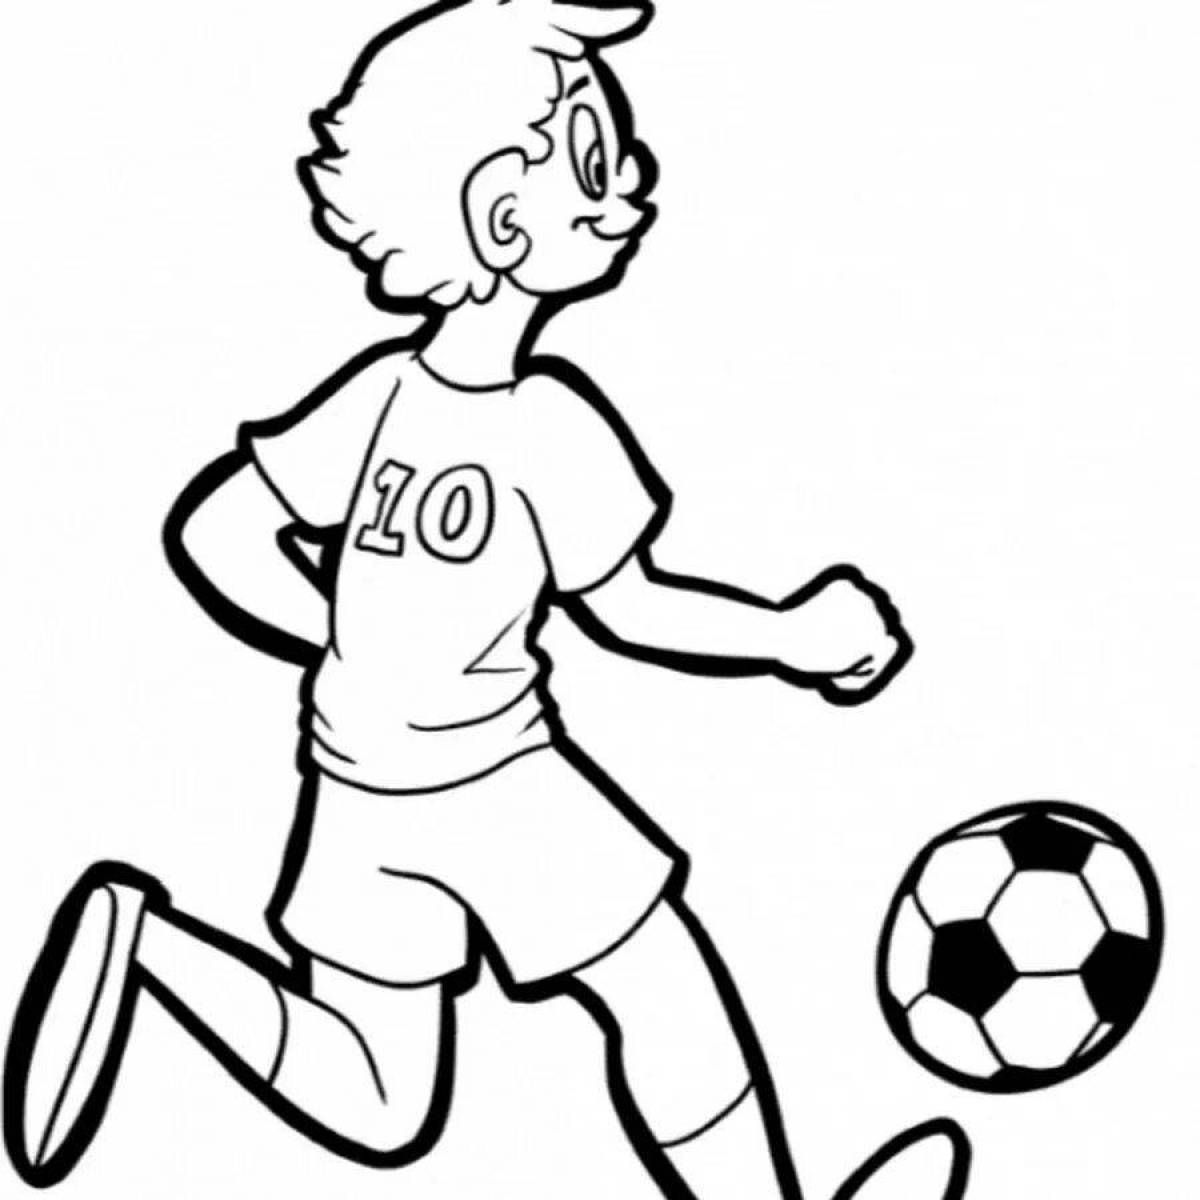 Joyful soccer player with ball